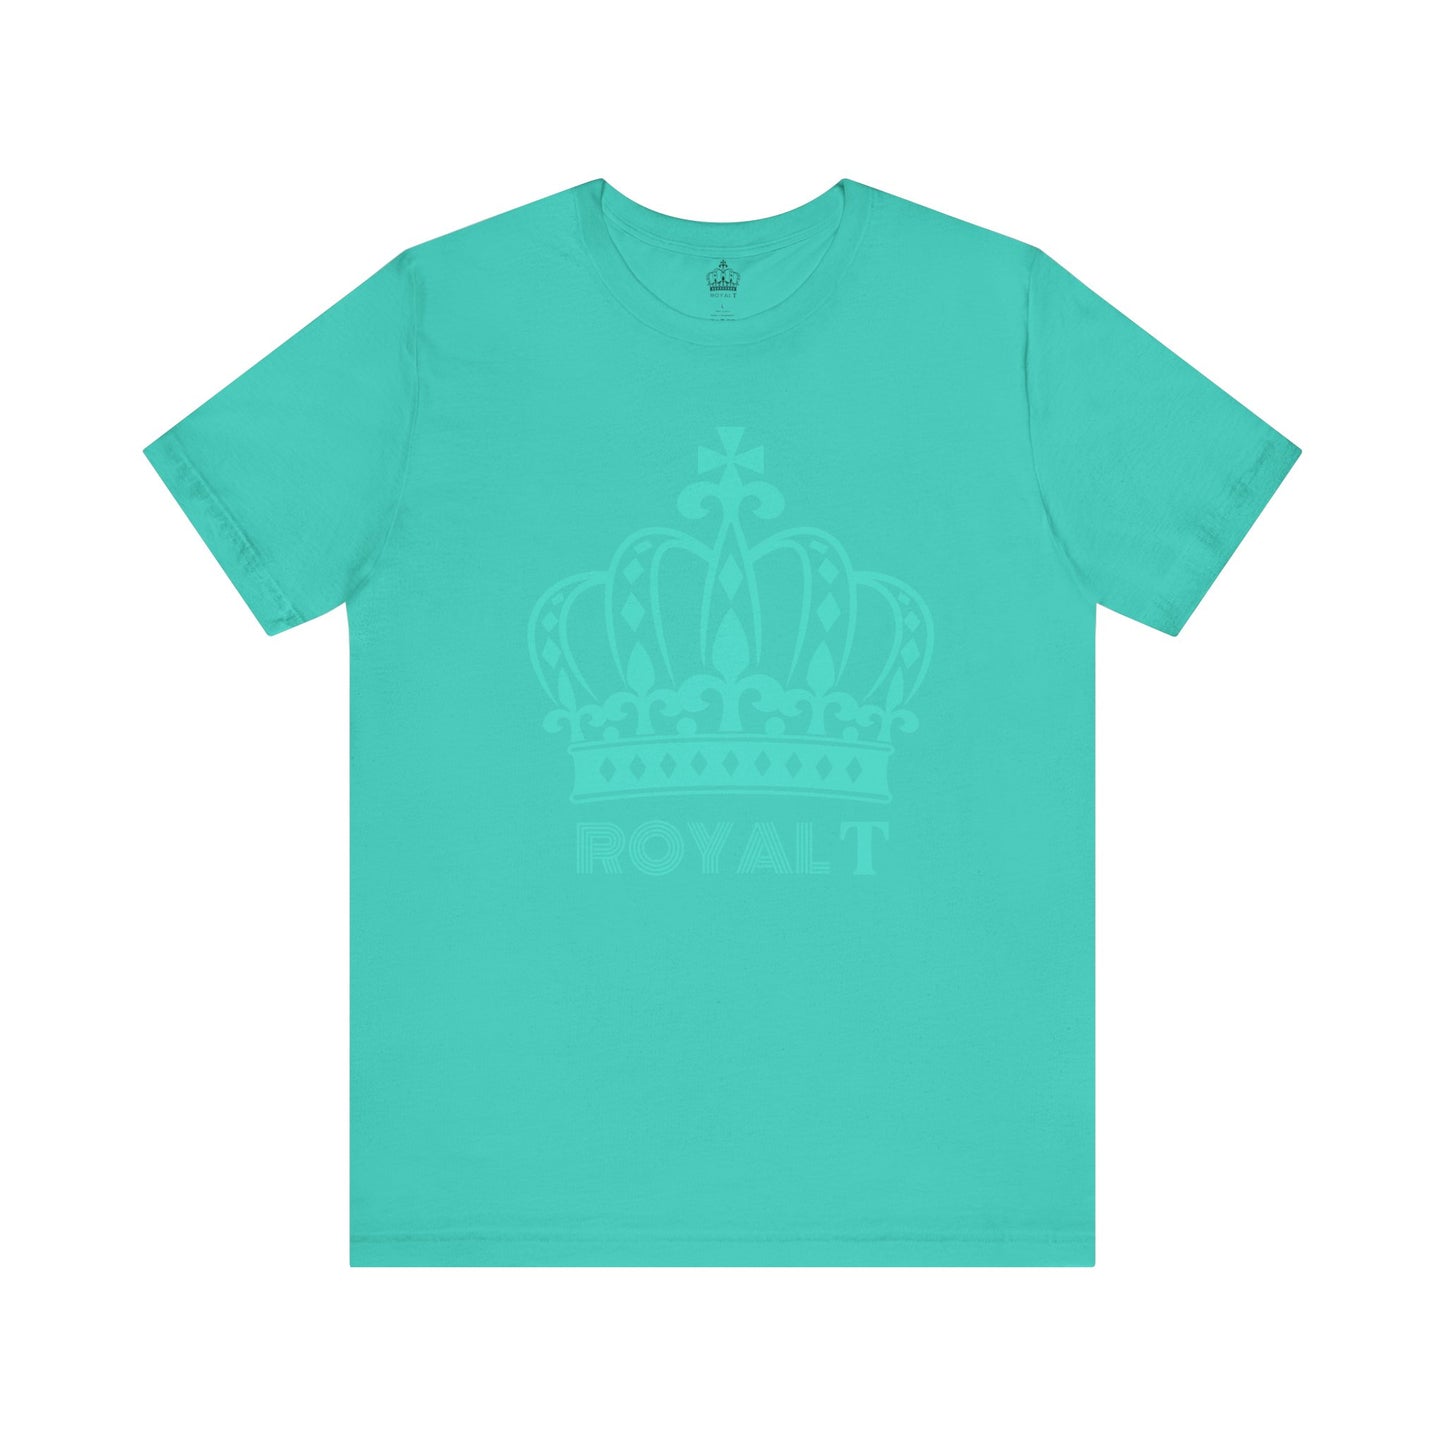 Teal Blue - Unisex Jersey Short Sleeve T Shirt - Blue Royal T